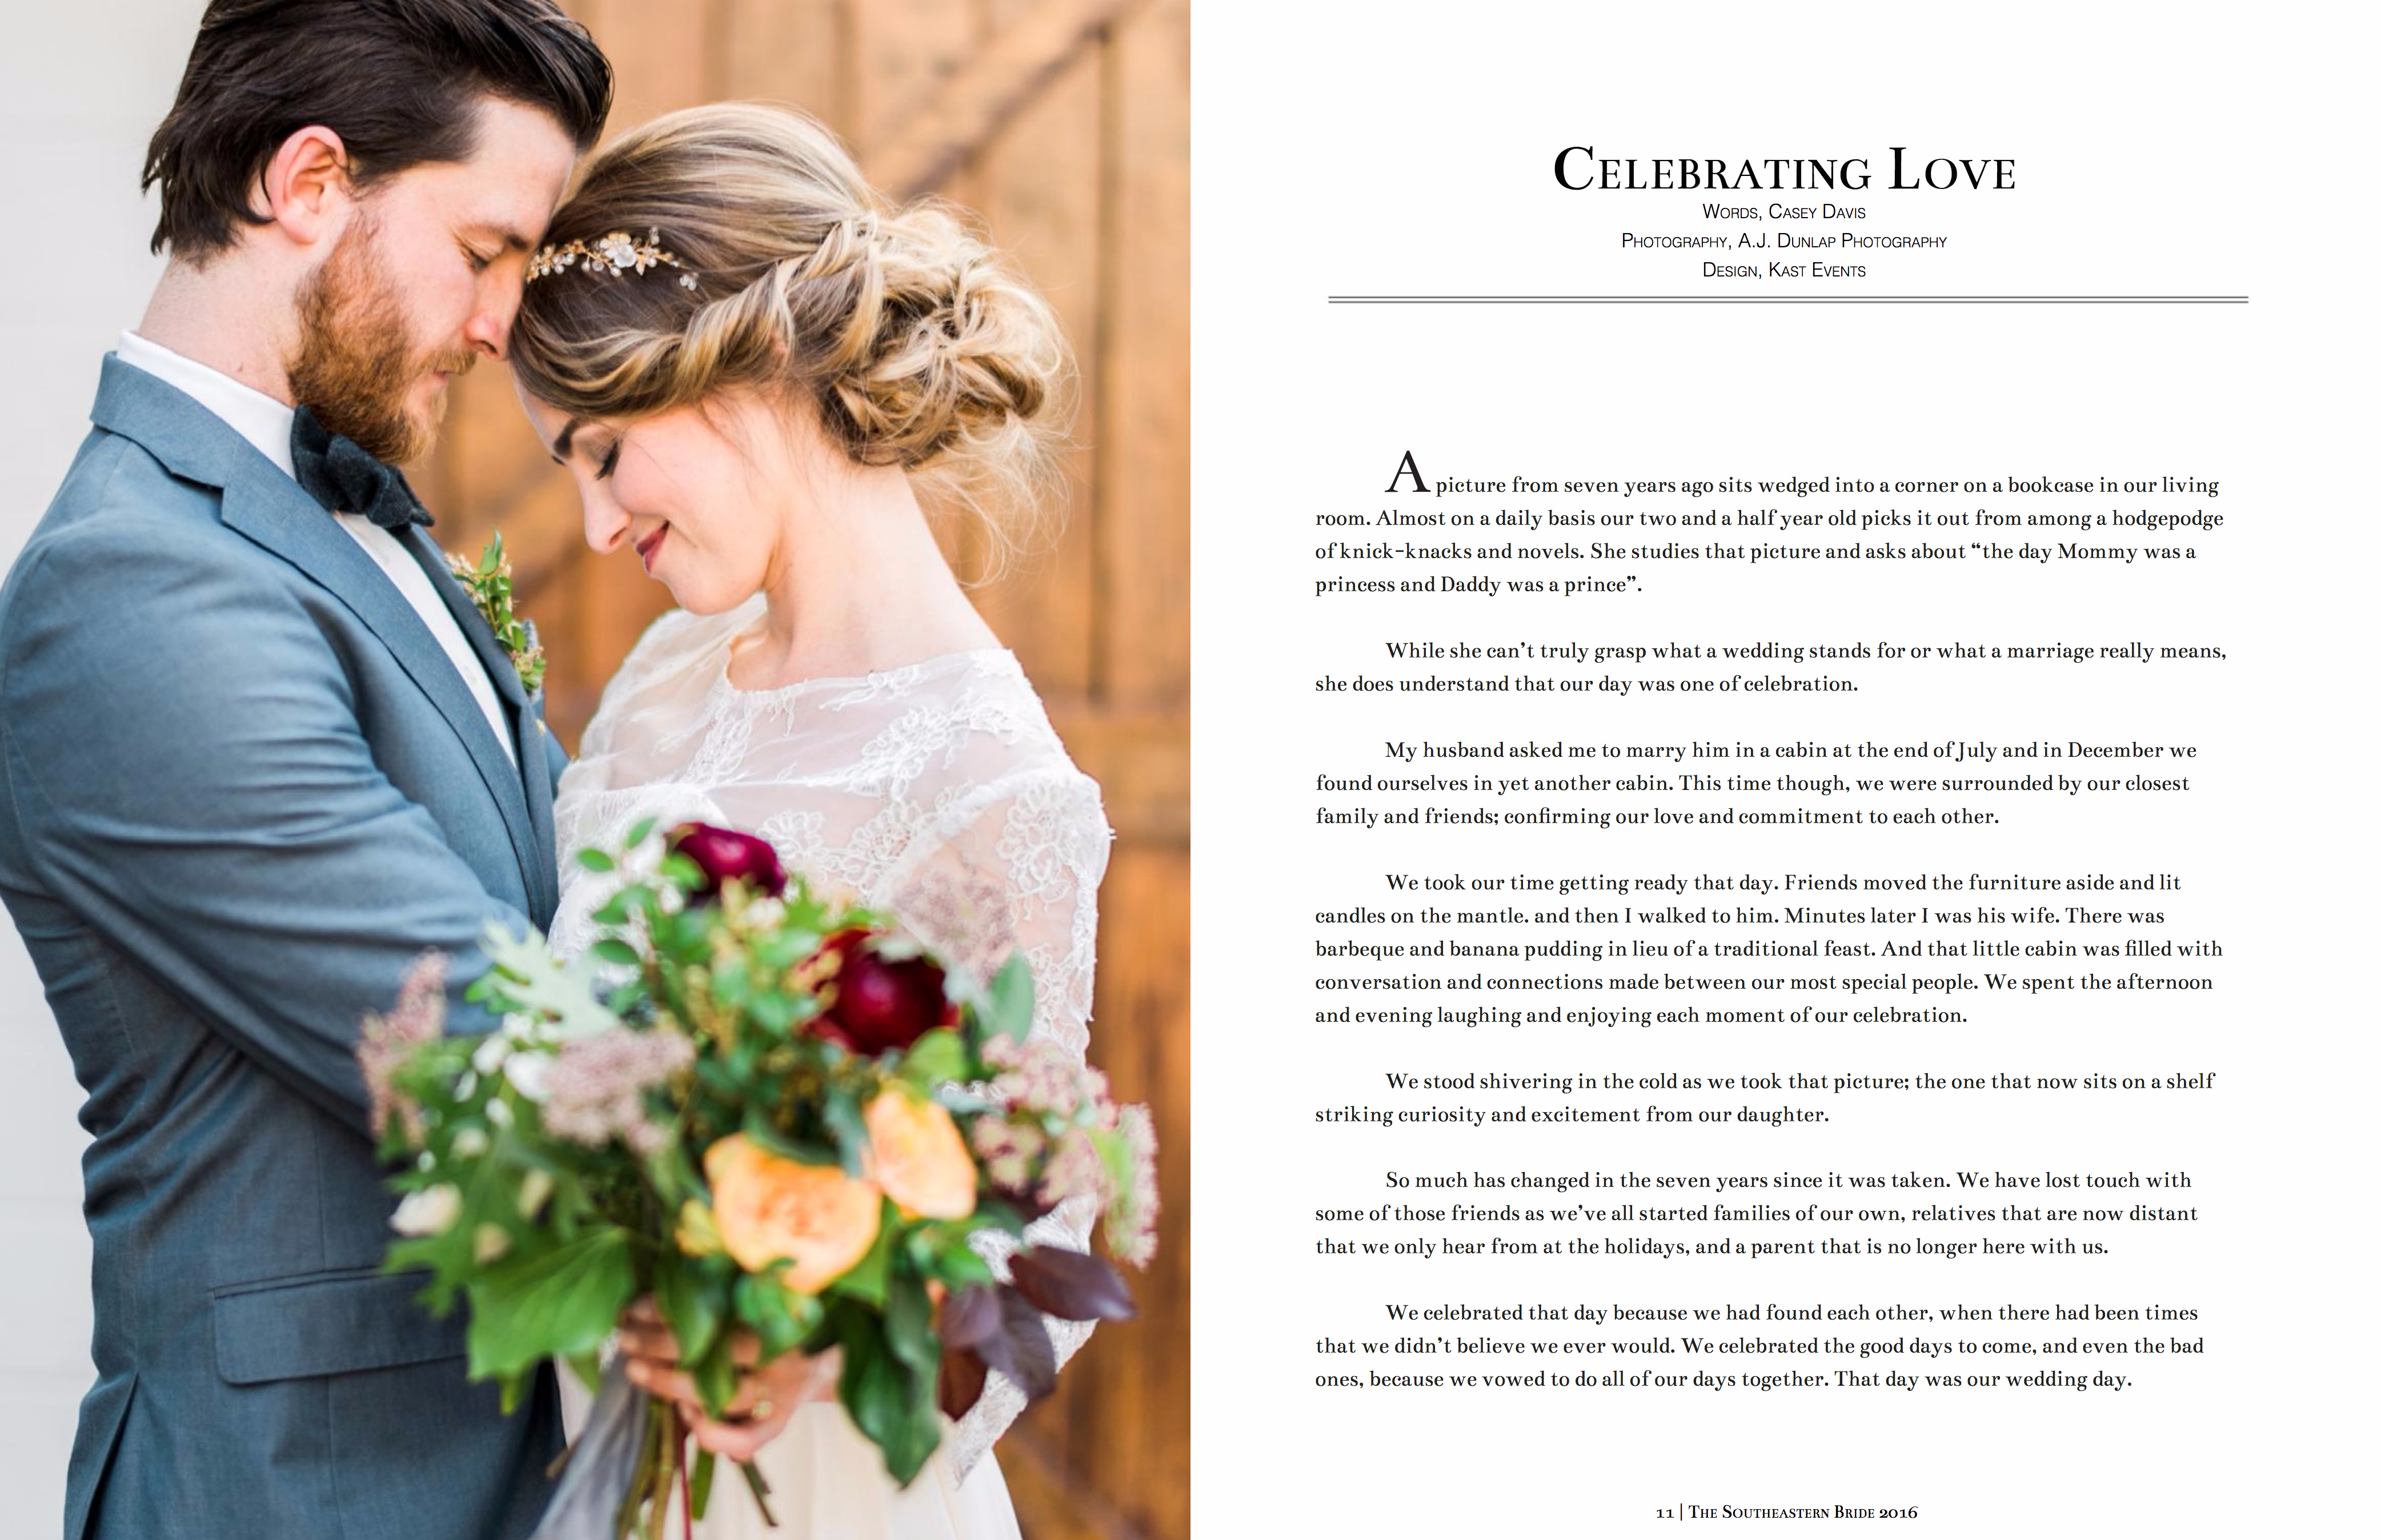 the southeastern bride magazine editorial photo